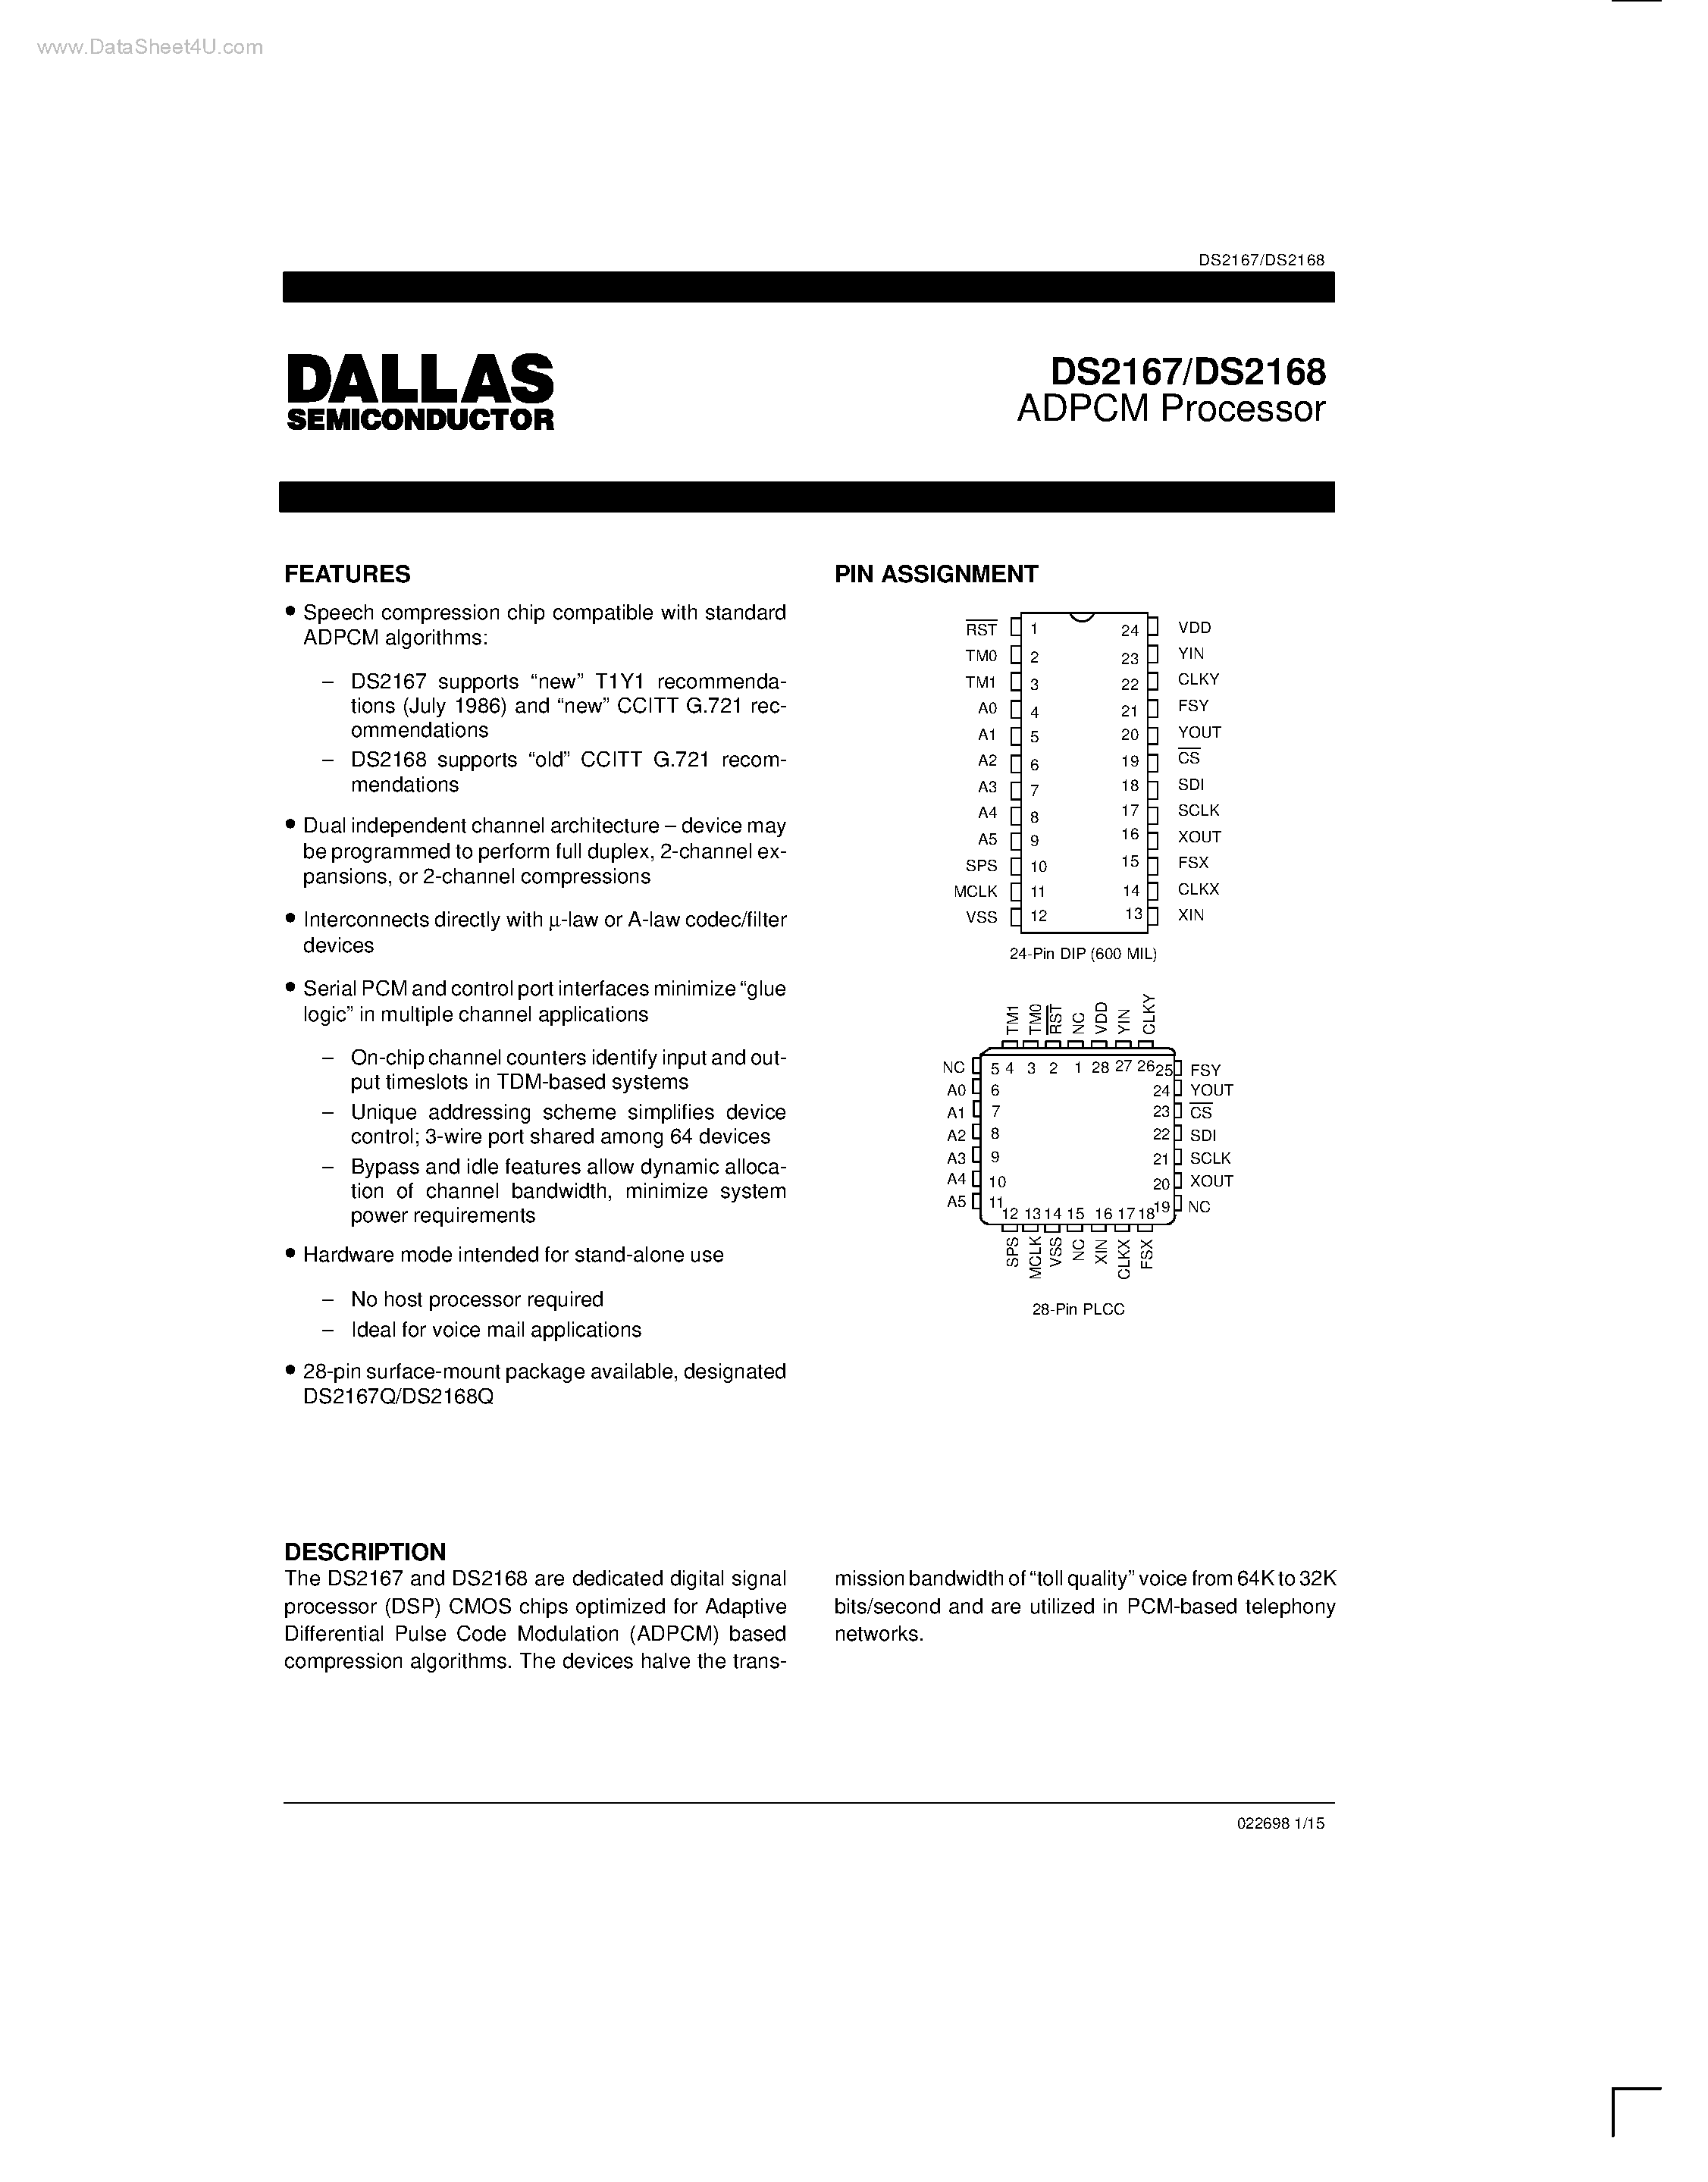 Даташит DS2167 - (DS2167 / DS2168) ADPCM Processor страница 1